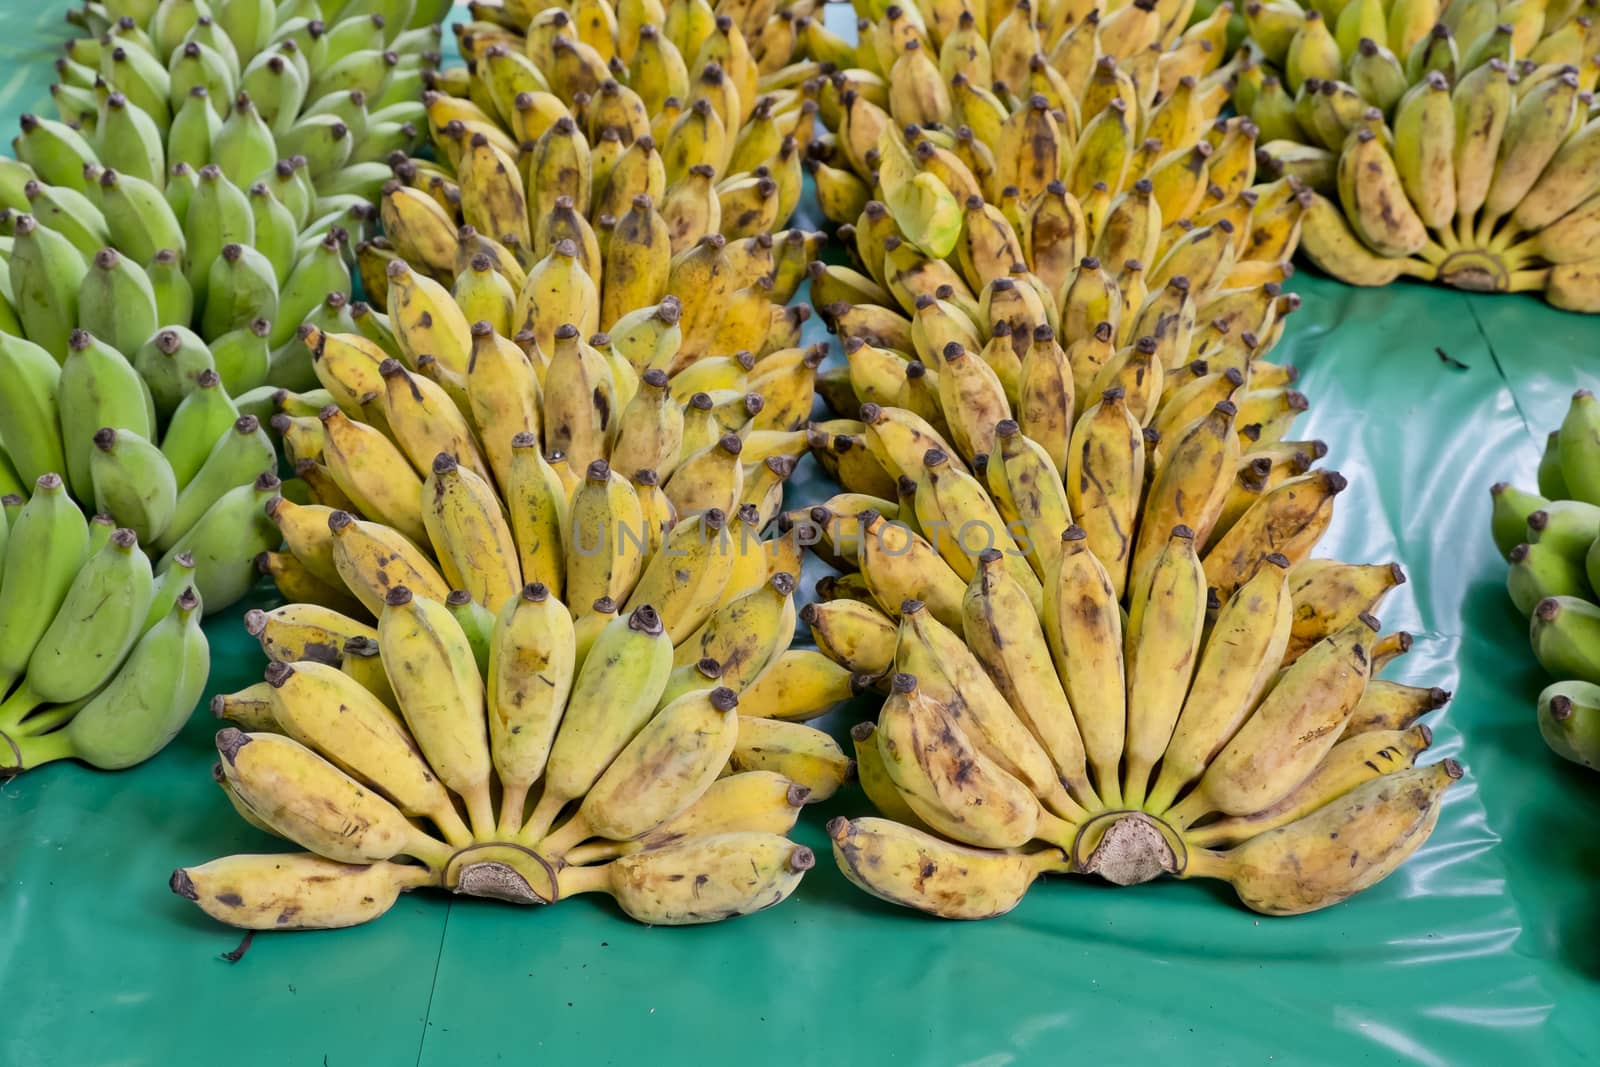 Bunch of ripe bananas by art9858